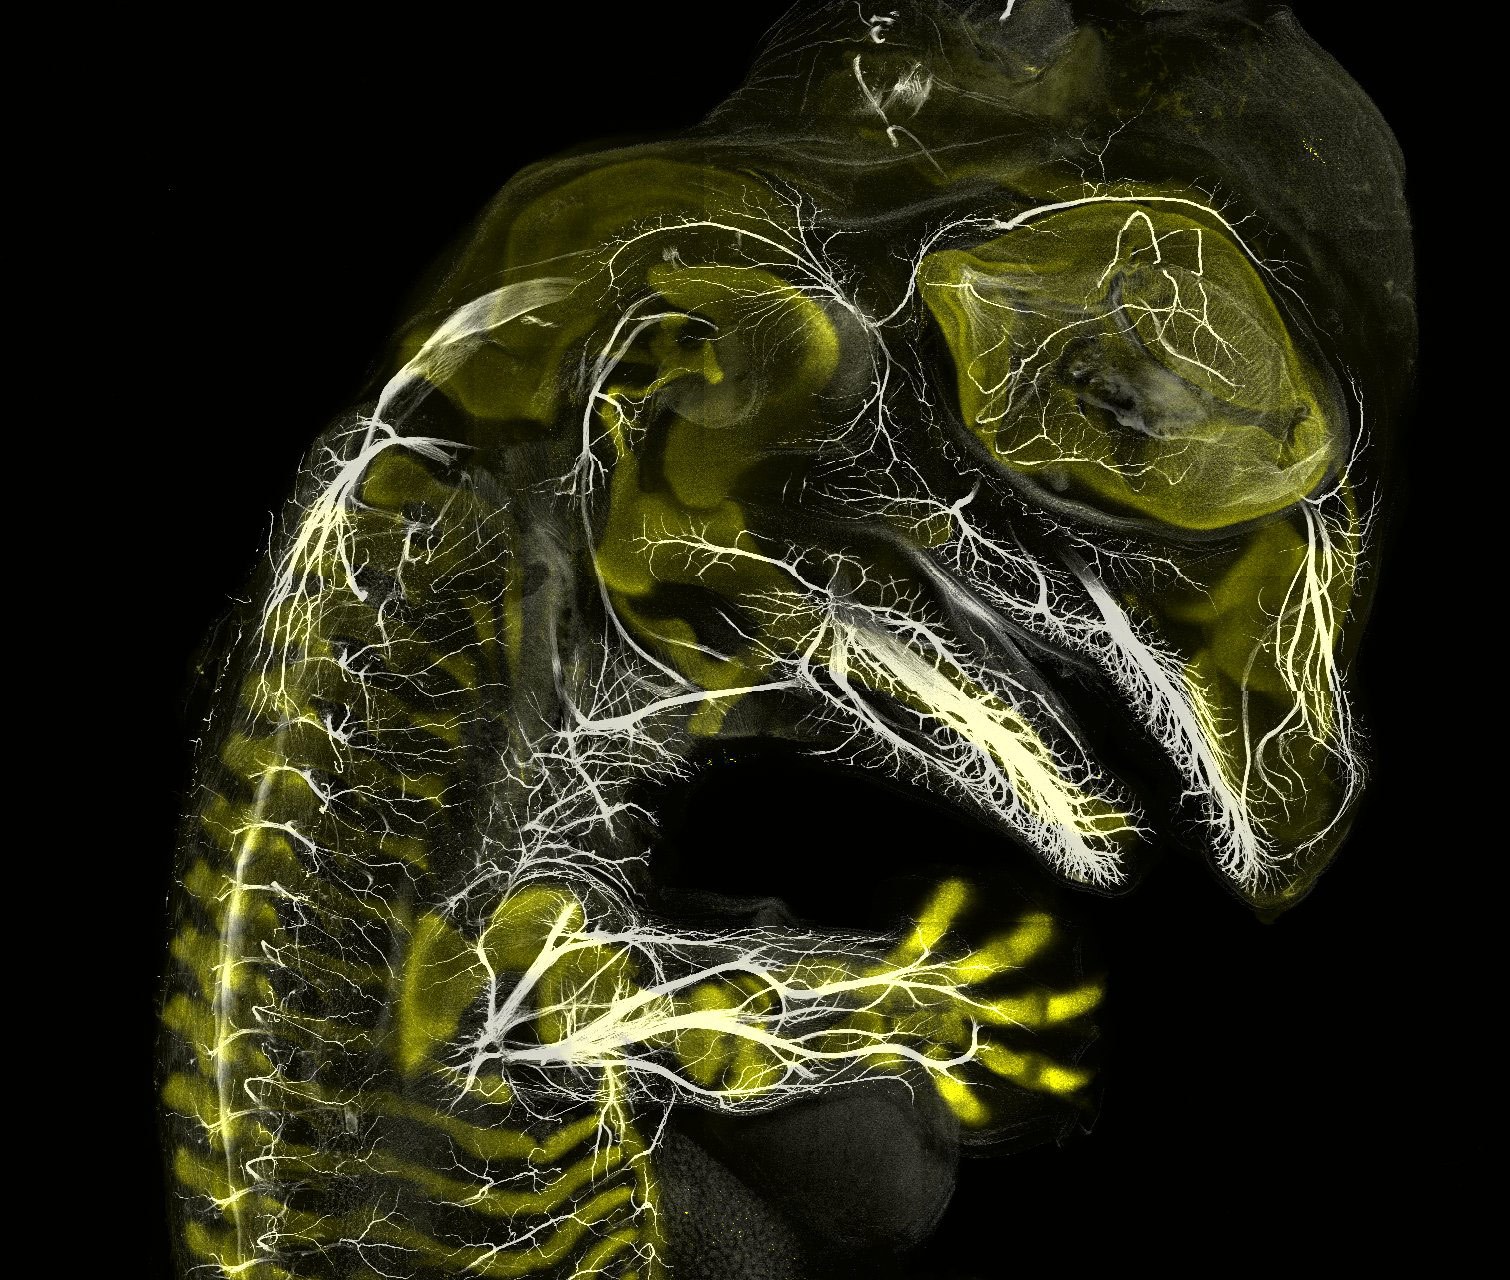 https://www.nikonsmallworld.com/images/photos/2019/3-alligator-embryo-stage-13-nerves-and-cartilage.jpg